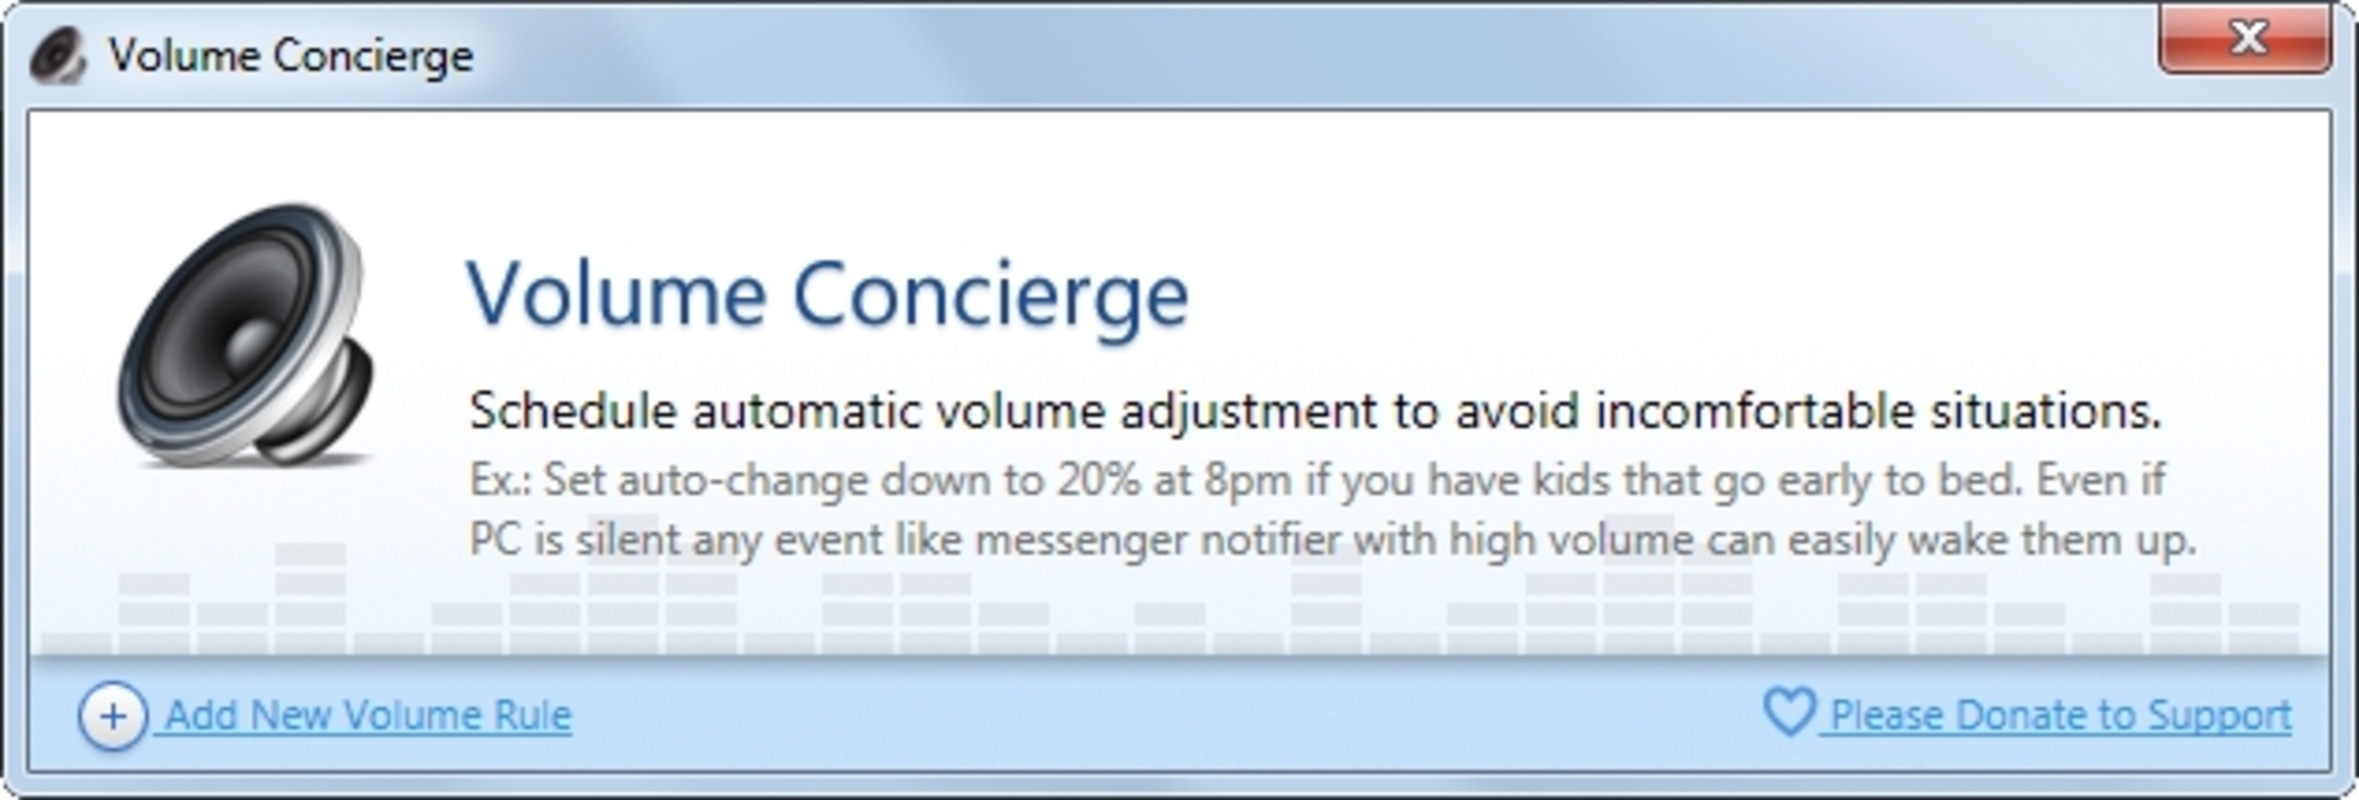 Volume Concierge 1.2.2 for Windows Screenshot 1